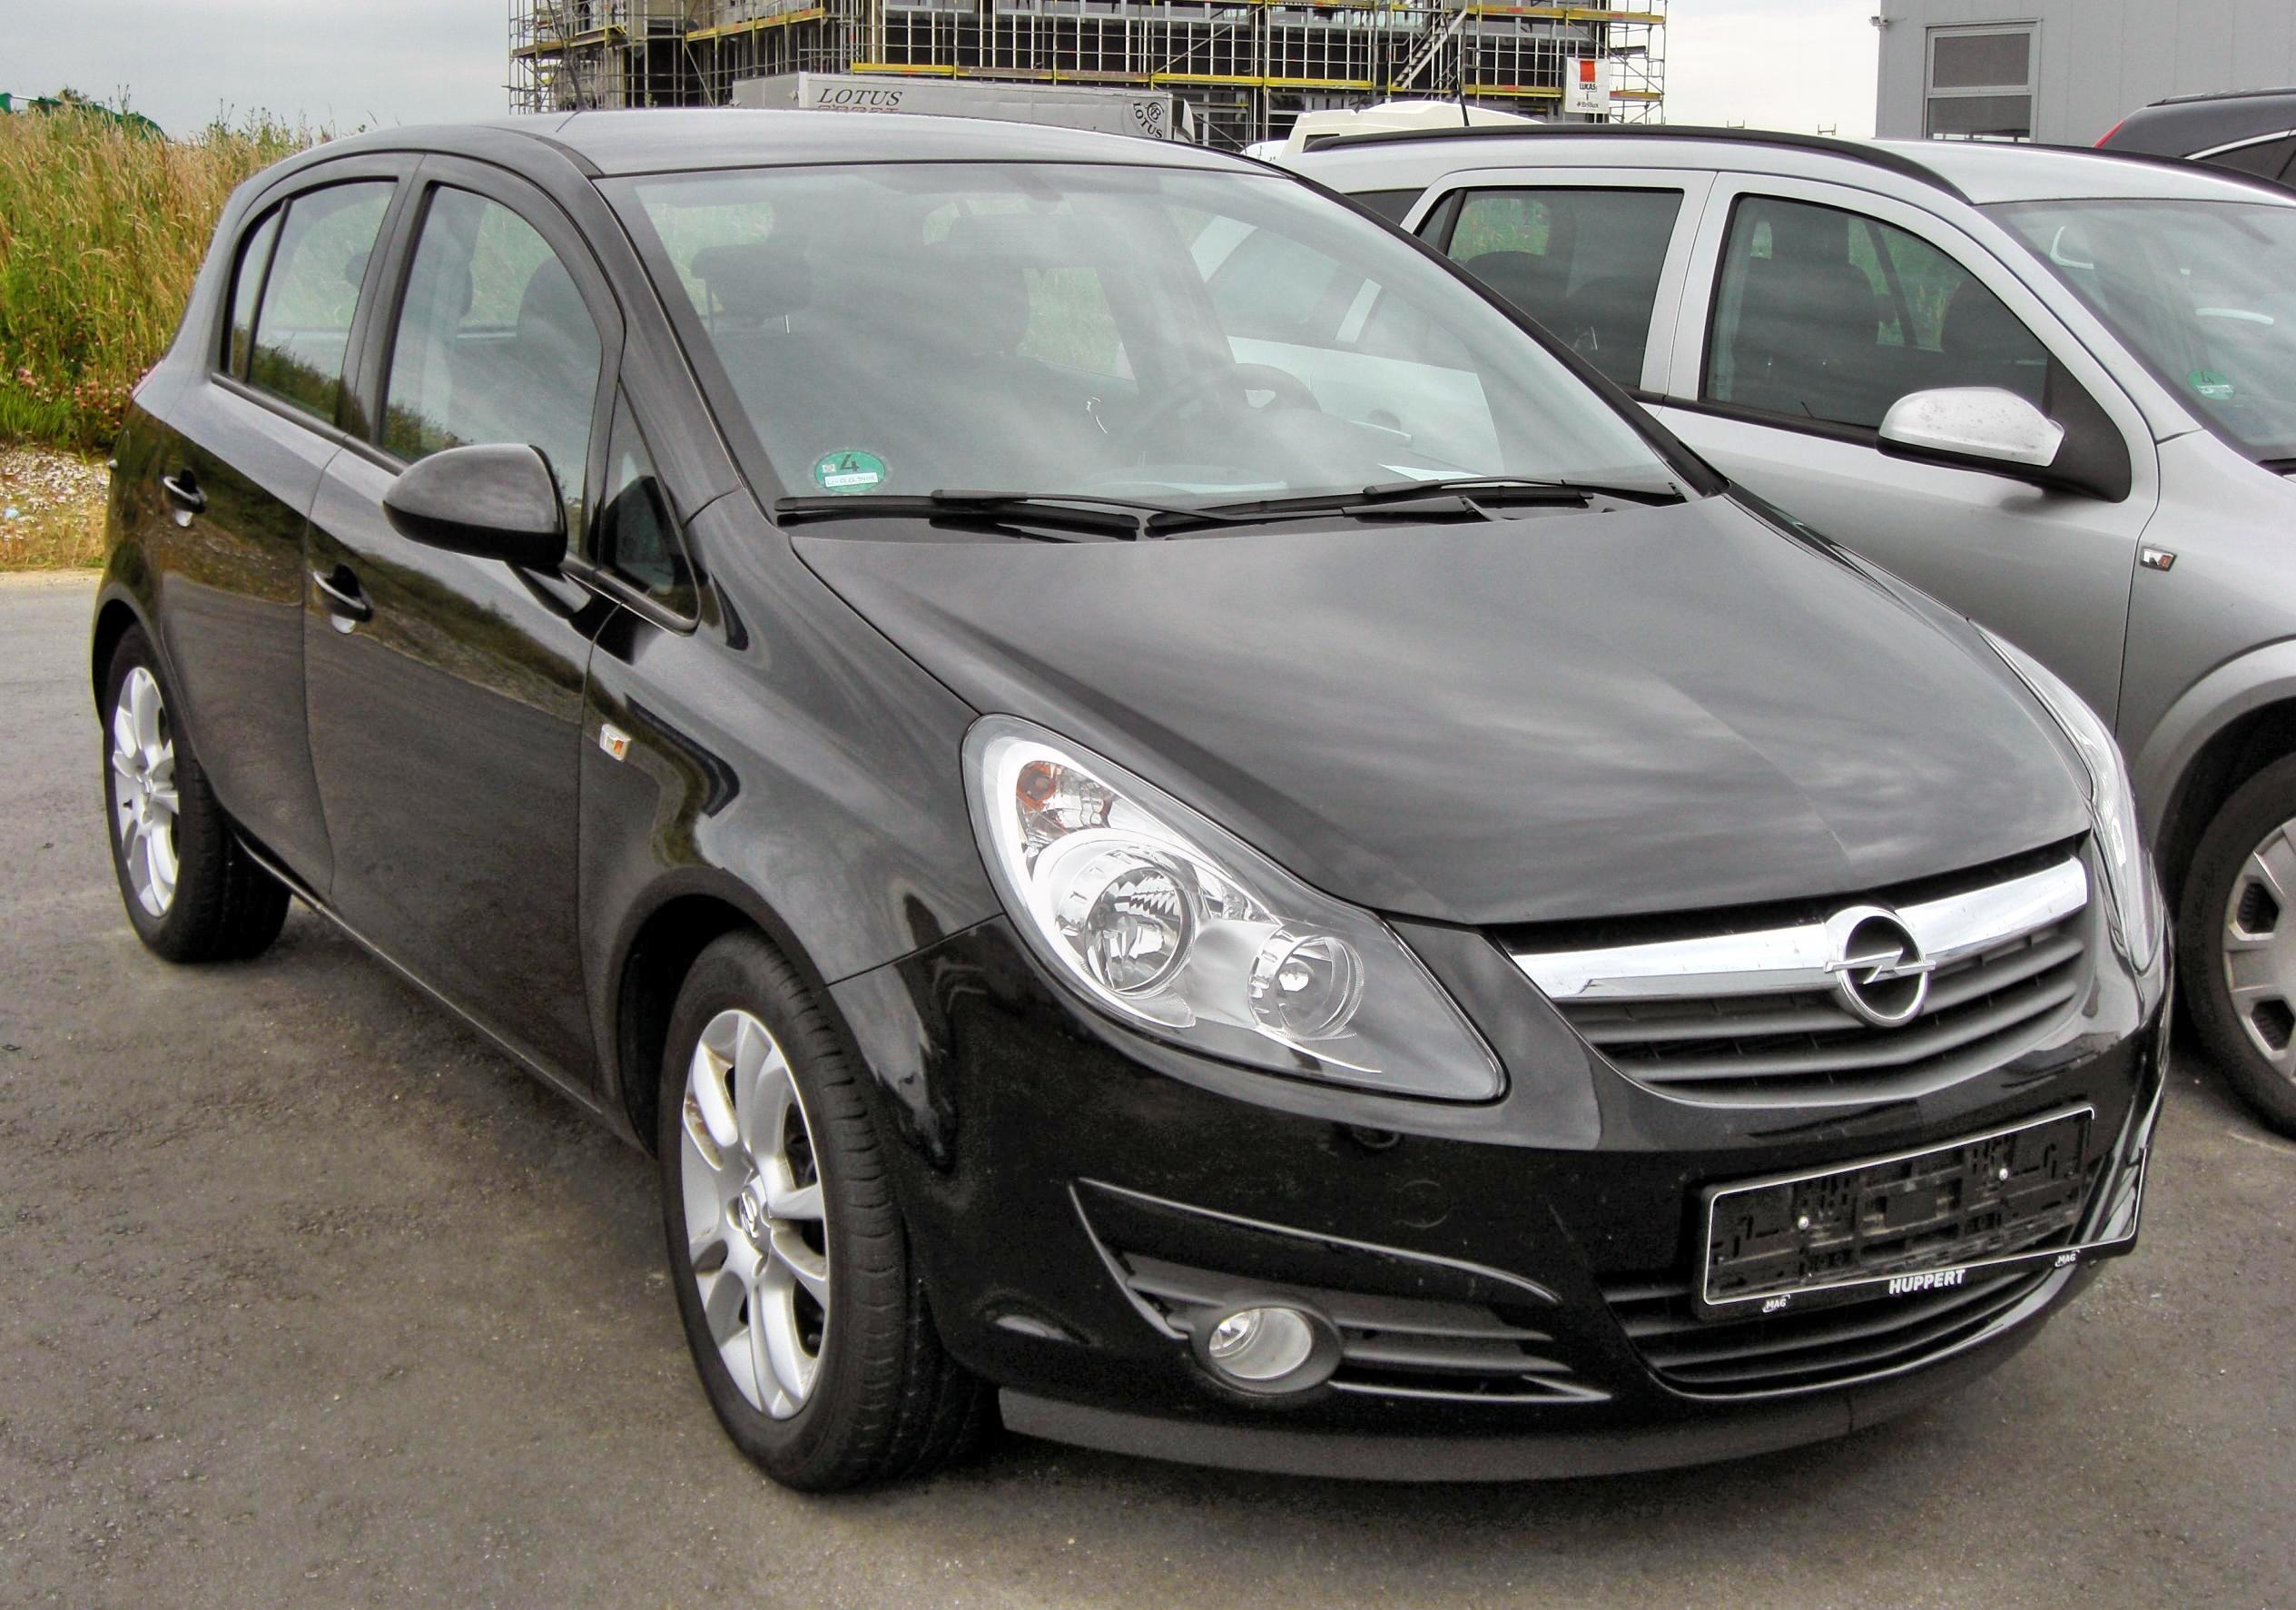 https://upload.wikimedia.org/wikipedia/commons/0/0a/Opel_Corsa_D_1.2_20090620_front.JPG